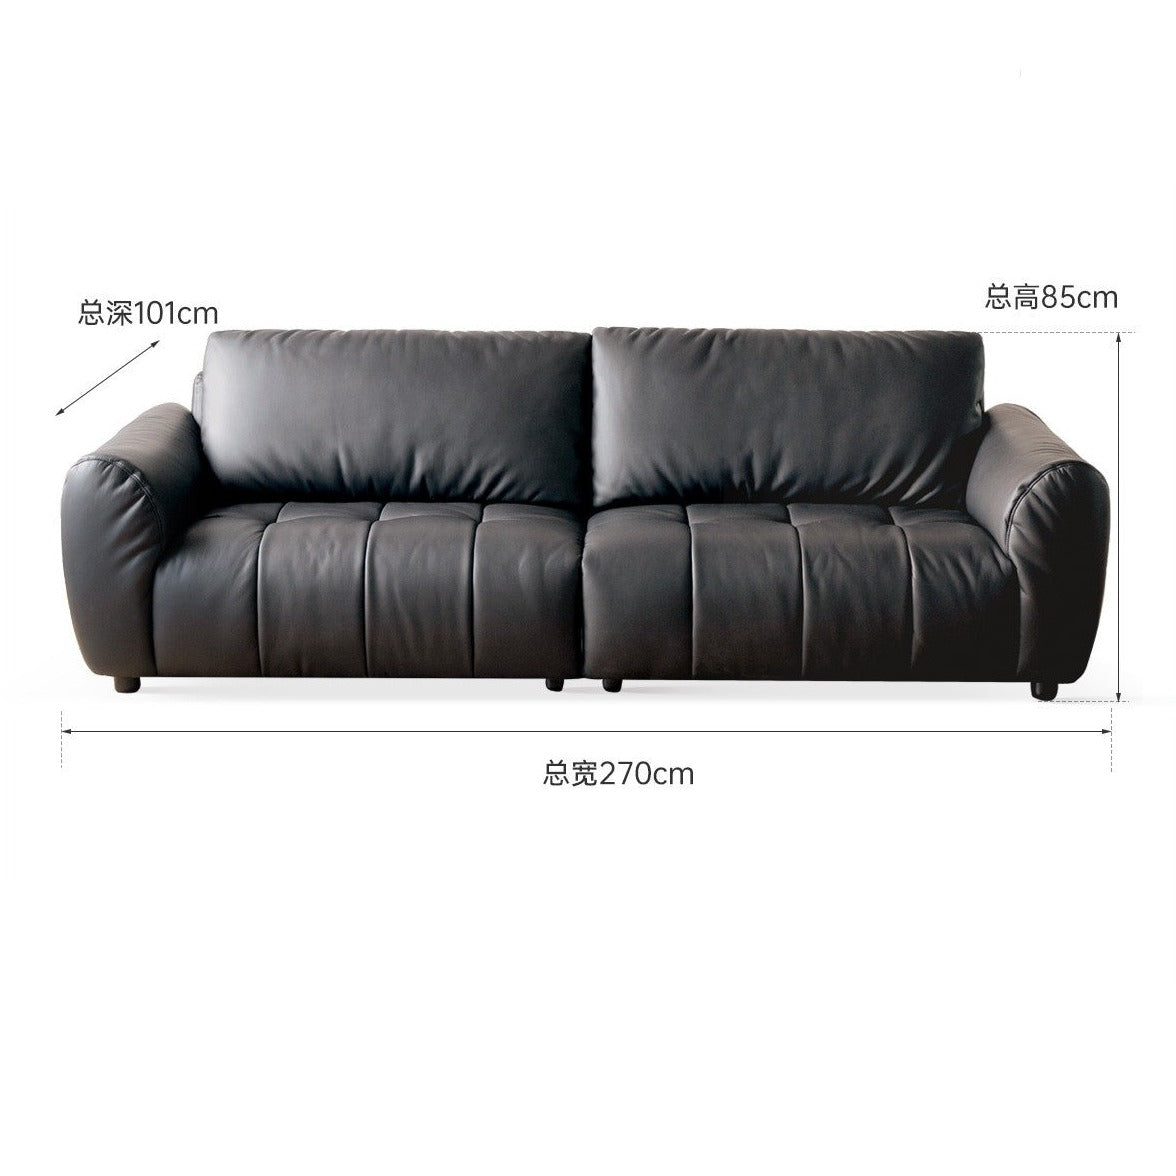 Eco-friendly synthetic leather, art Italian minimalist black sofa "